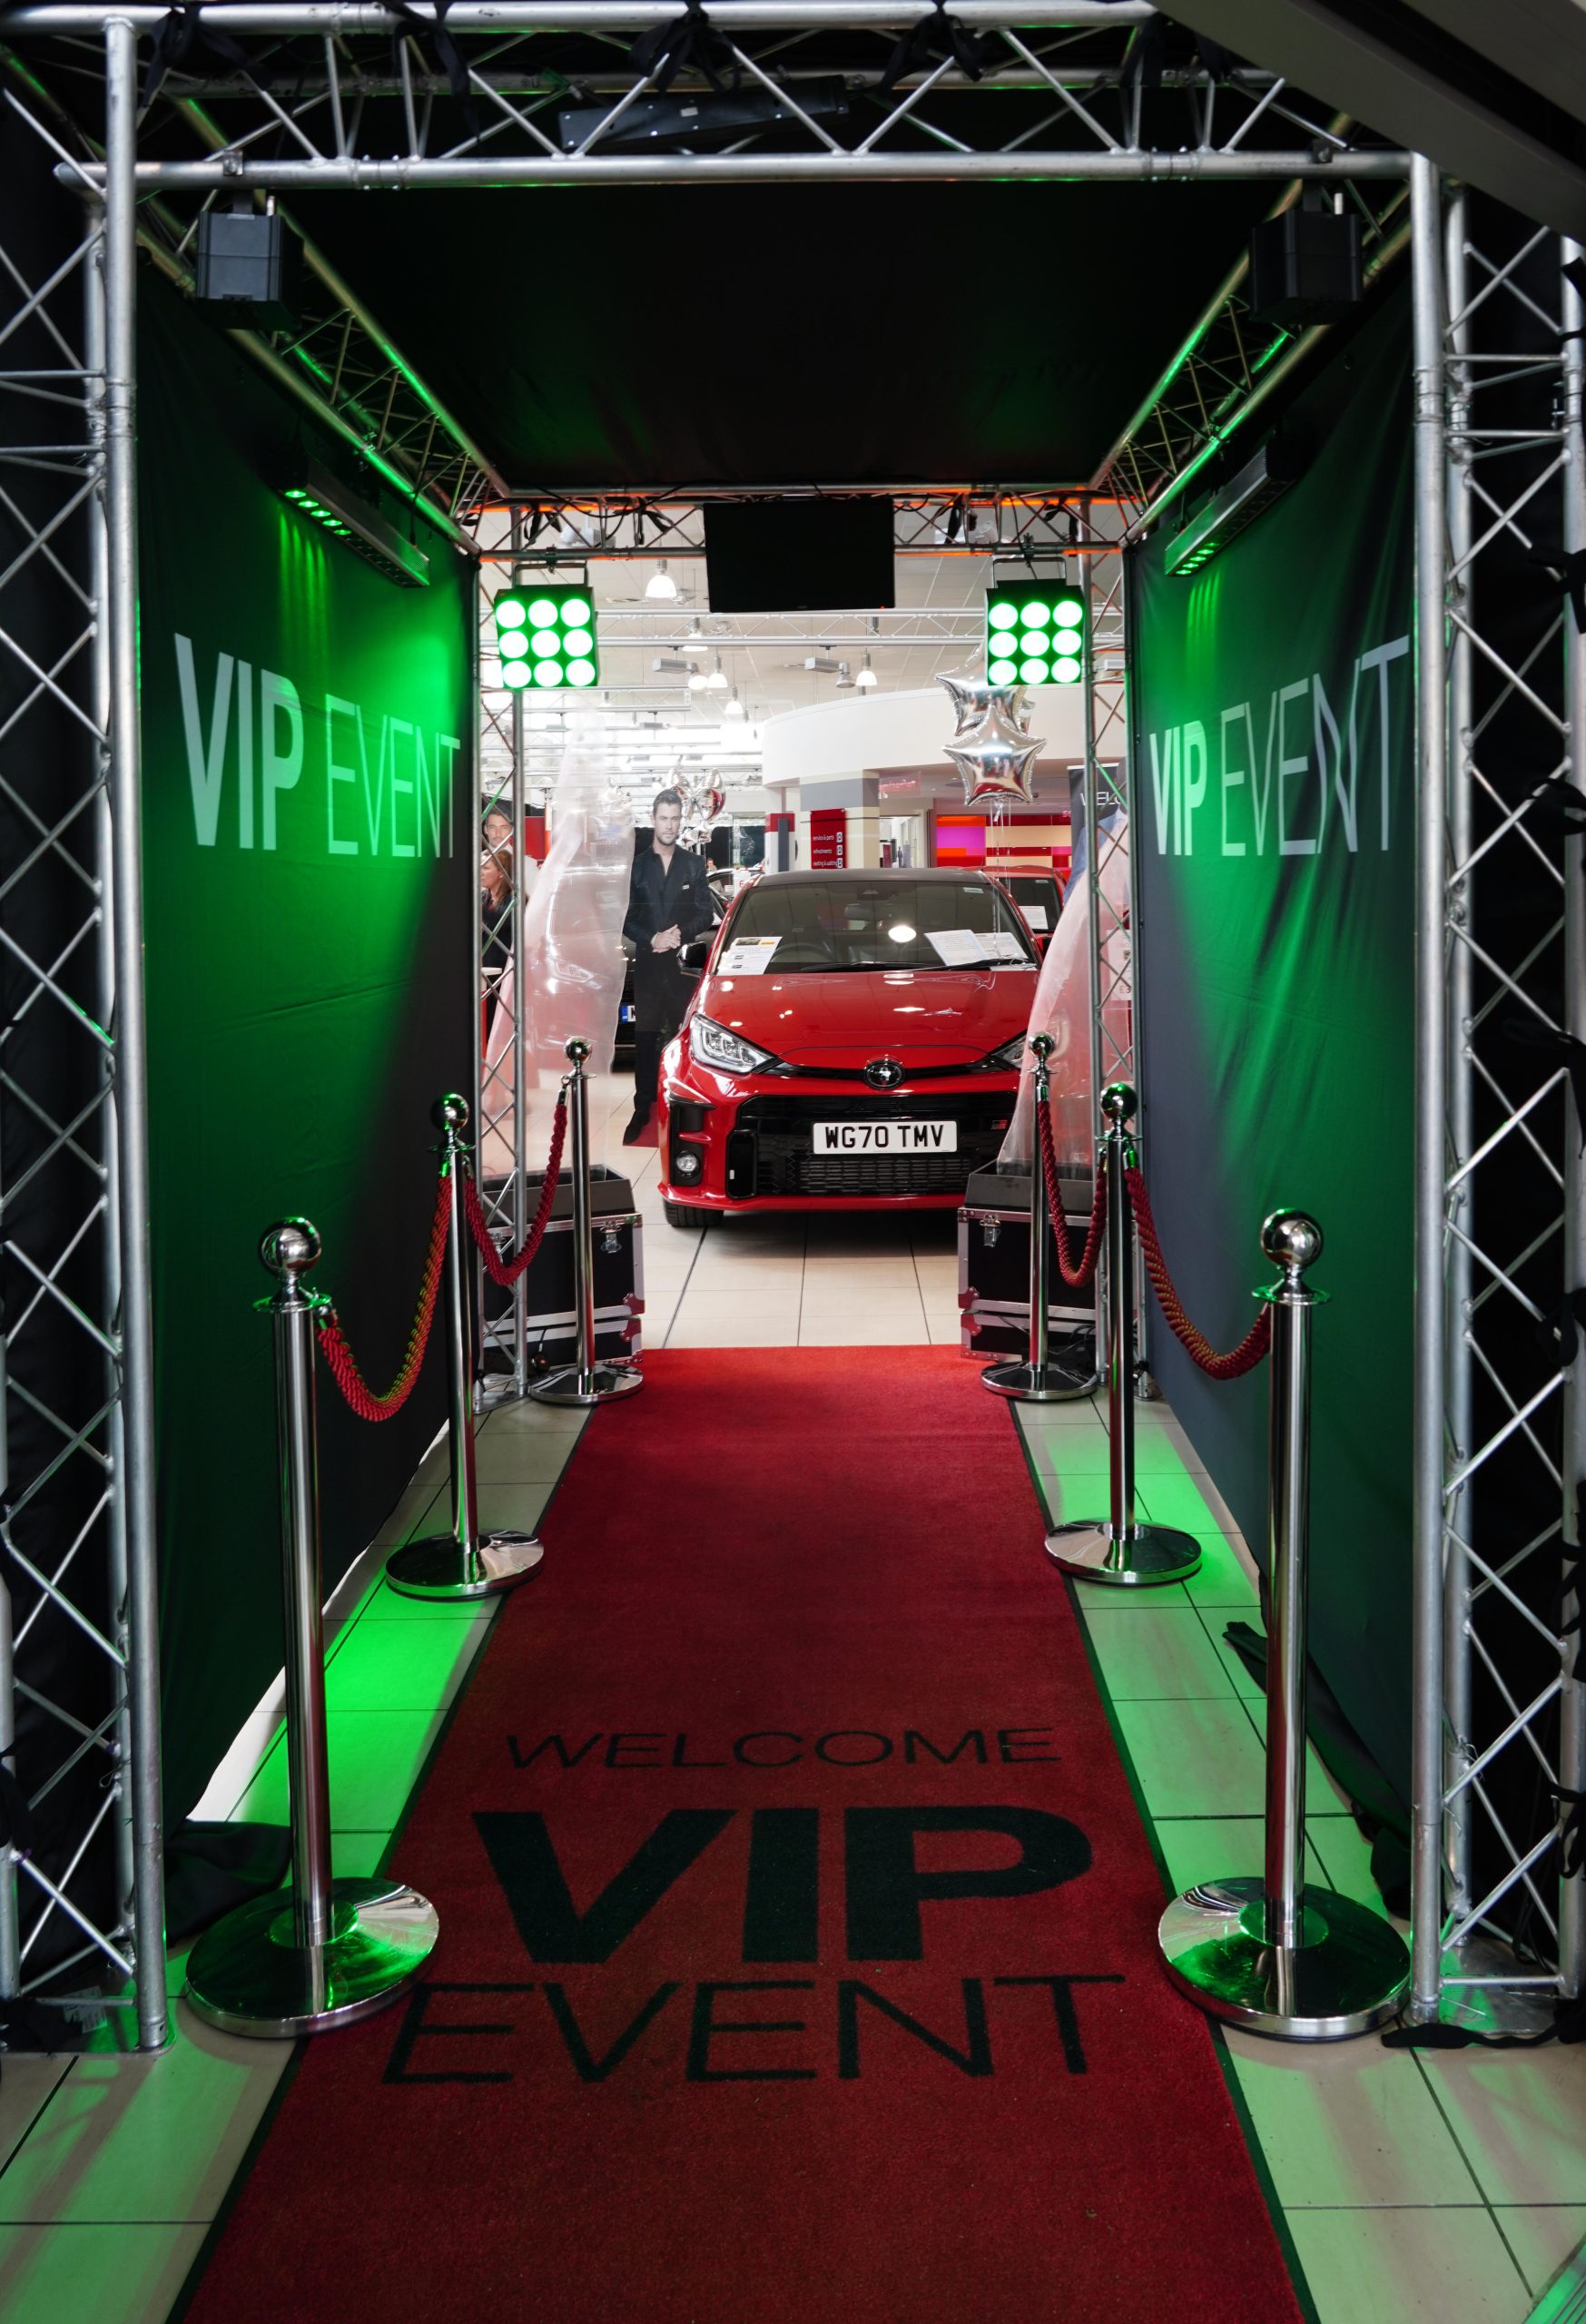 Toyota VIP Event Showroom